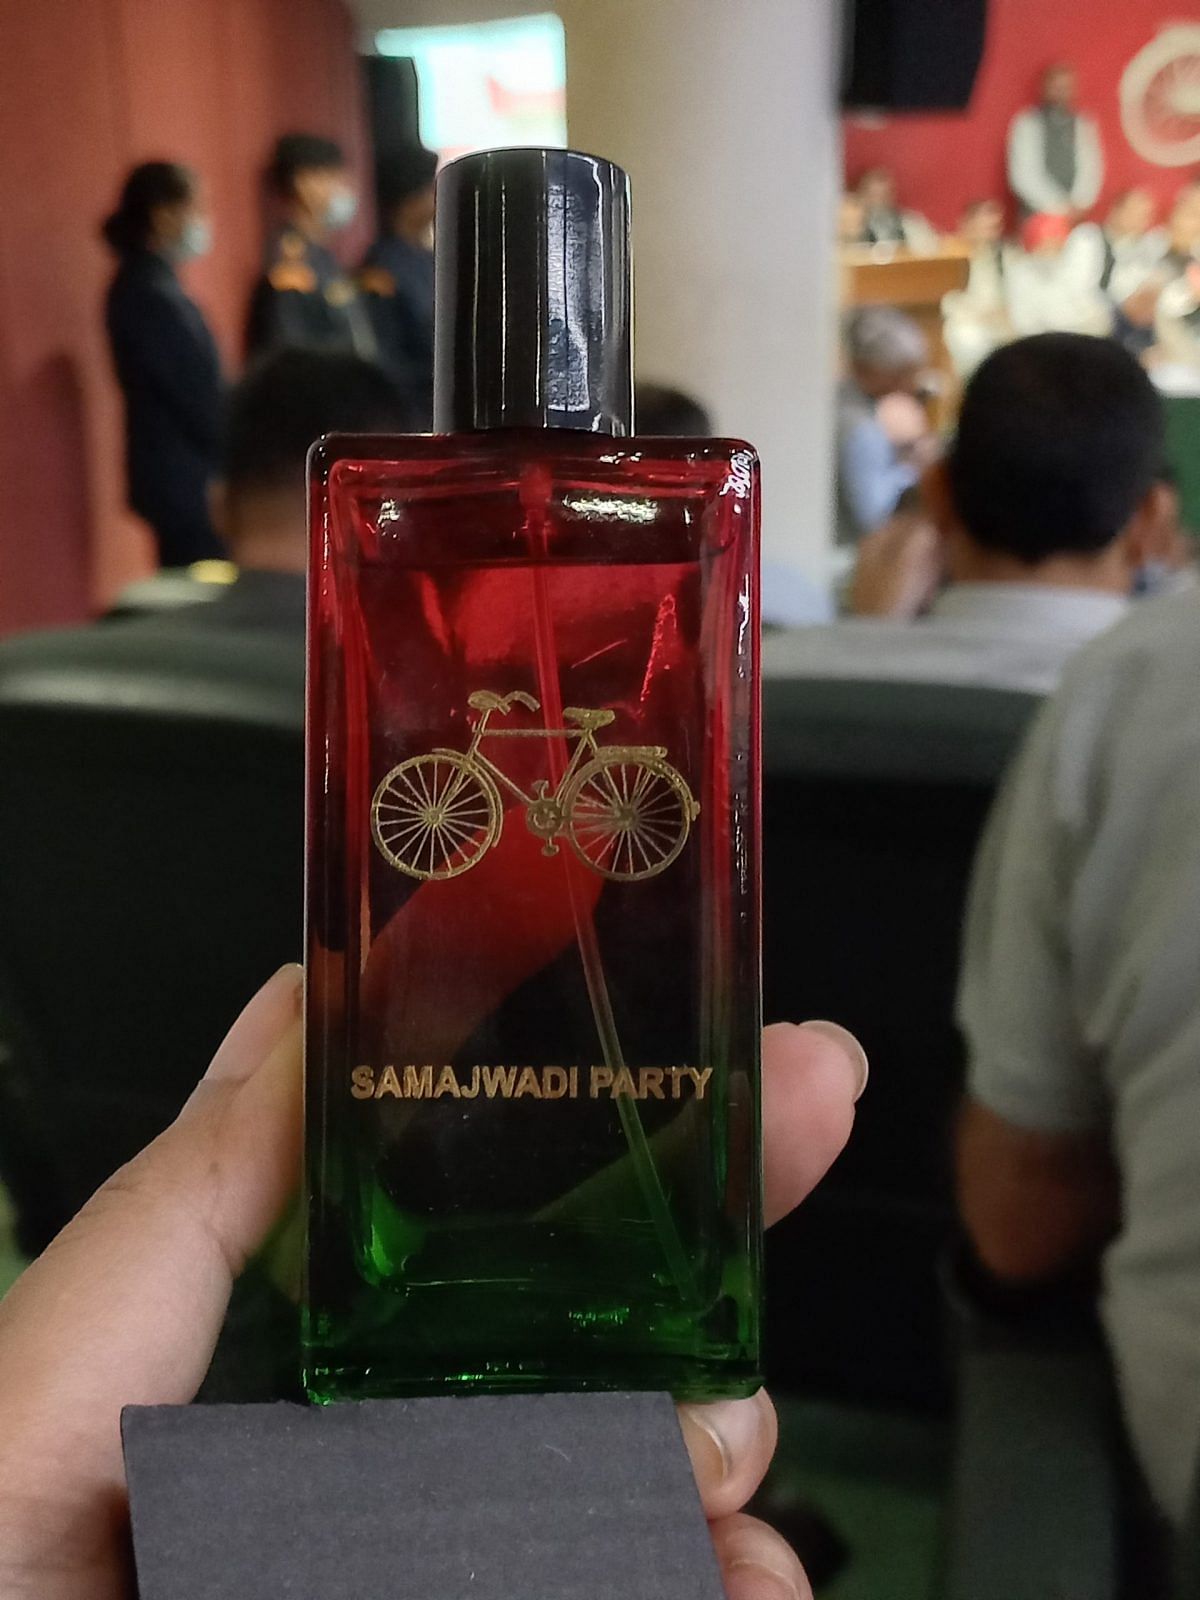 The SP perfume bottle | Photo: Prashant Srivastava 